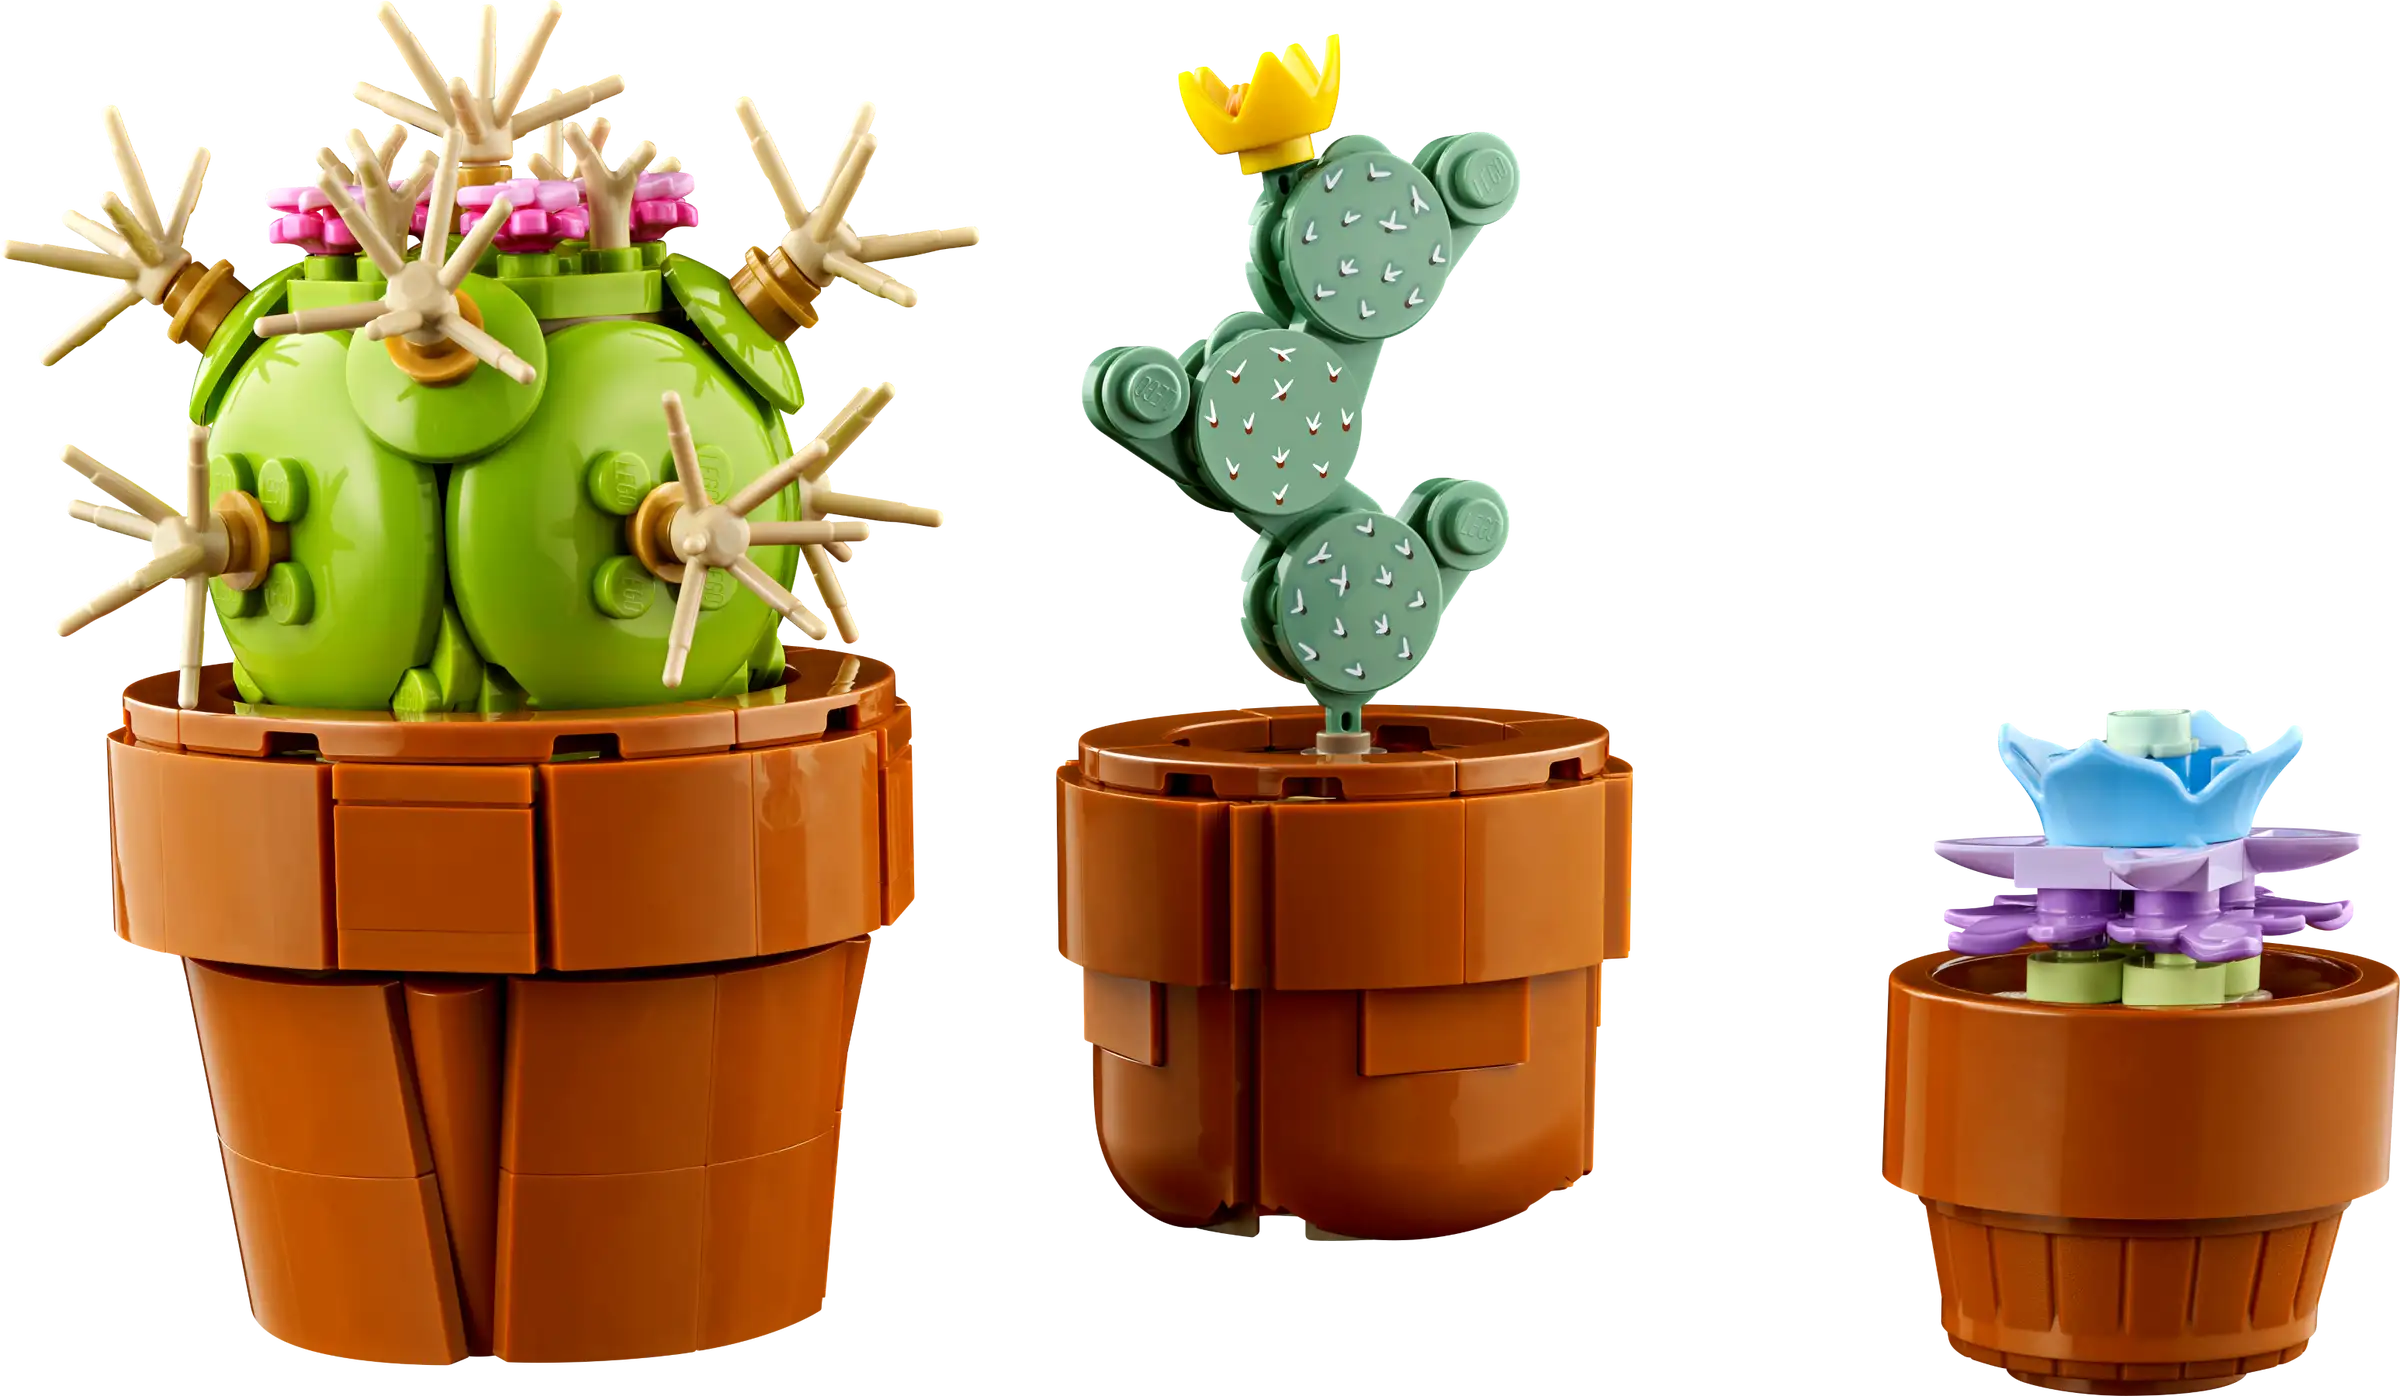 LEGO 10329 Tiny Plants